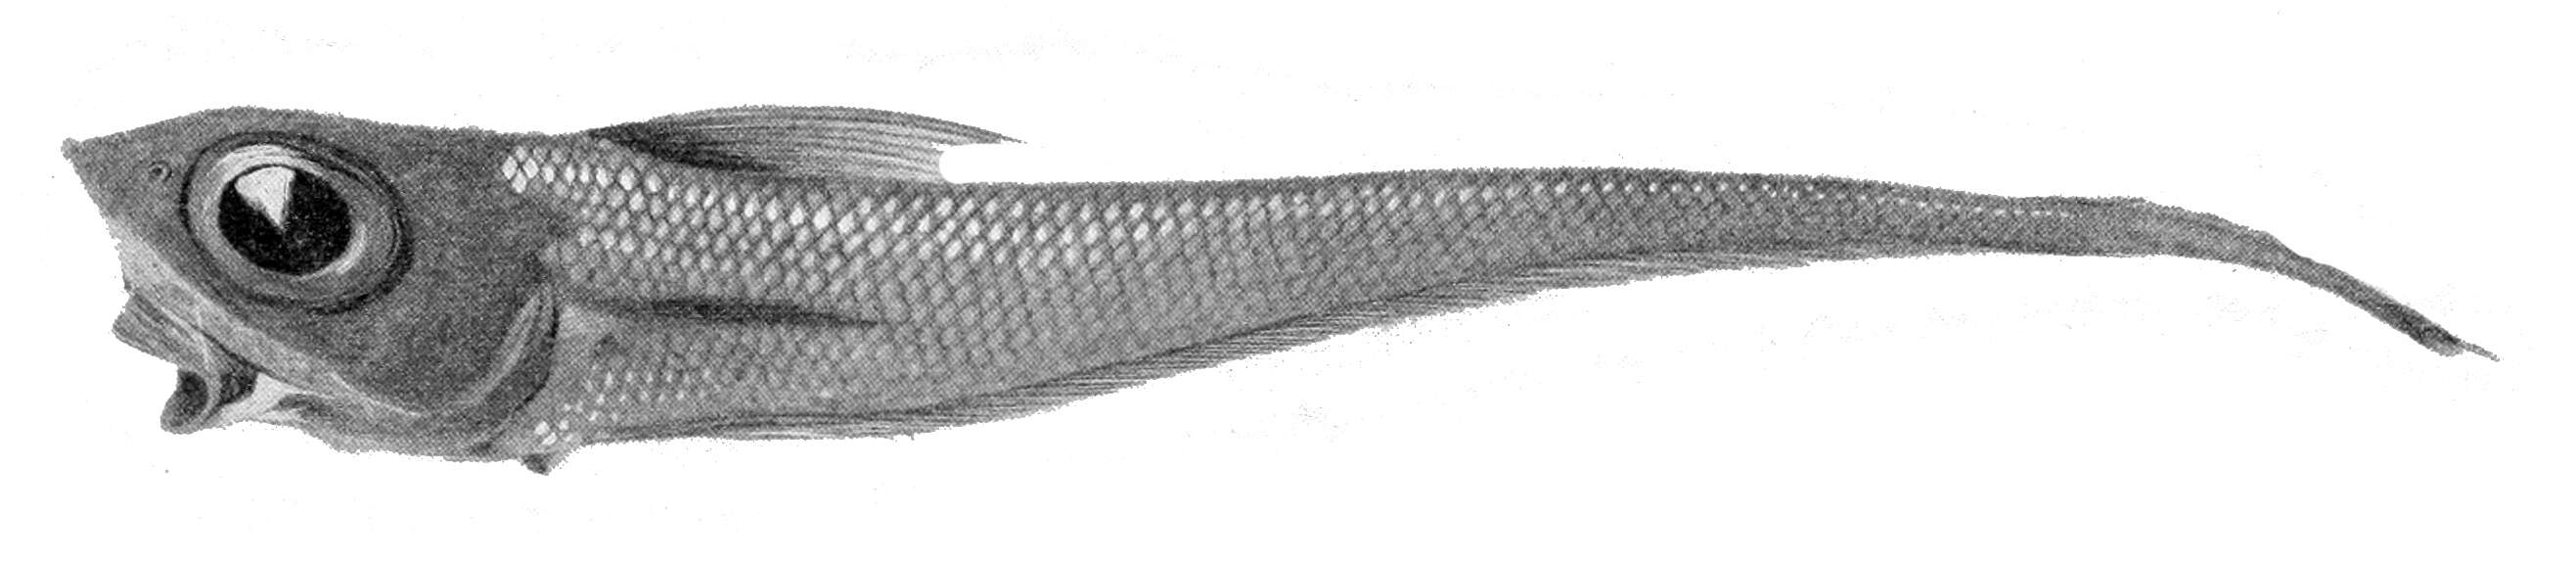 Image de Coelorinchus fasciatus (Günther 1878)